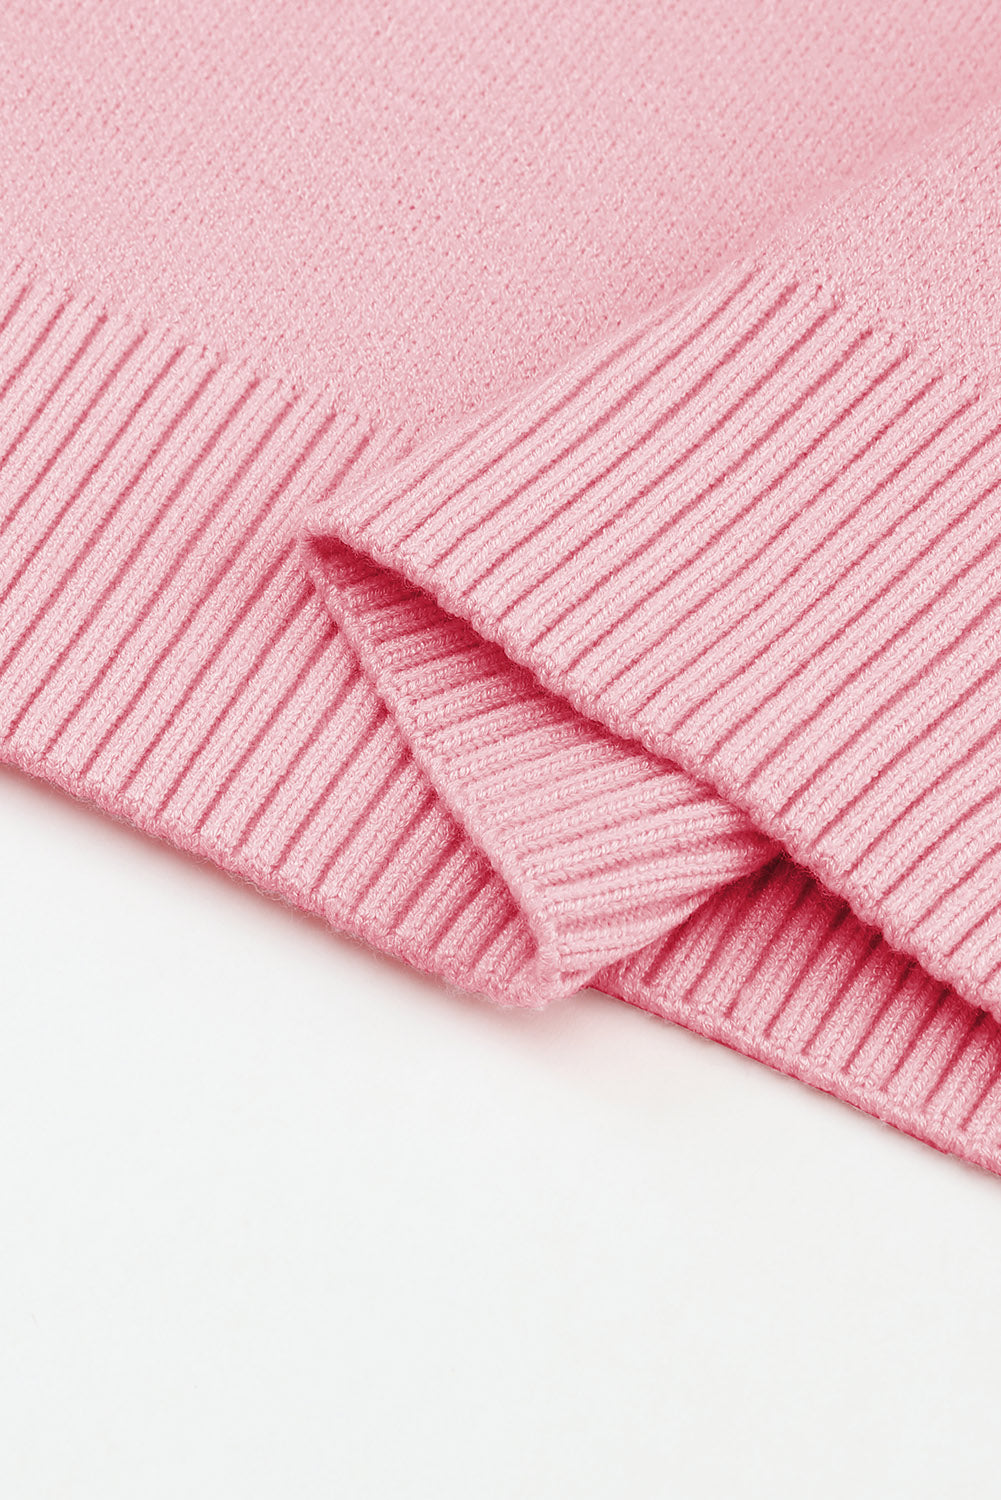 Pink Floral Pattern Drop Shoulder Pullover Knit Sweater